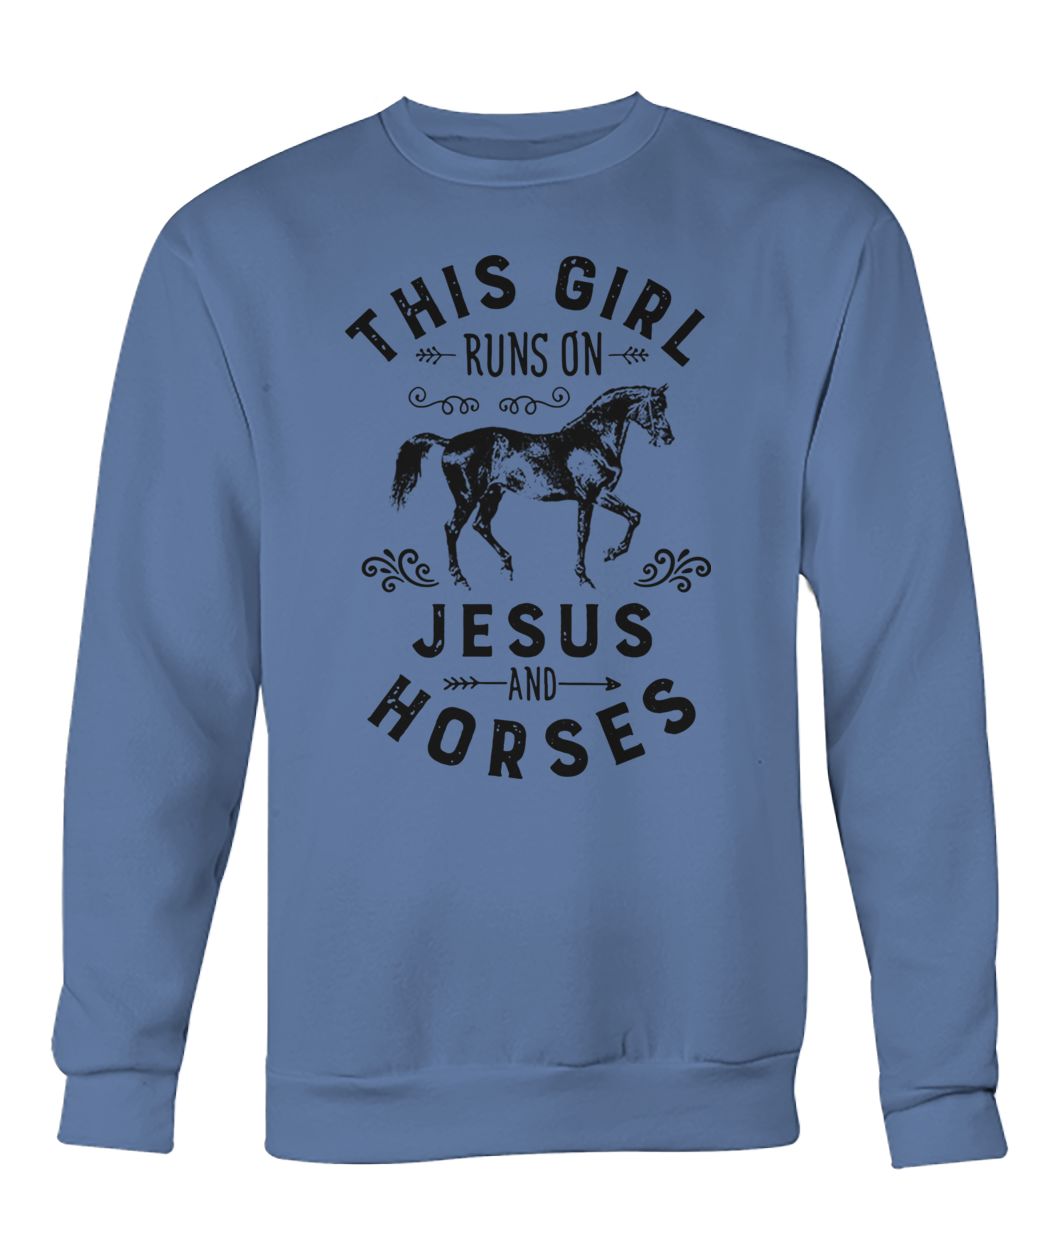 This girl runs on Jesus and horses crew neck sweatshirt